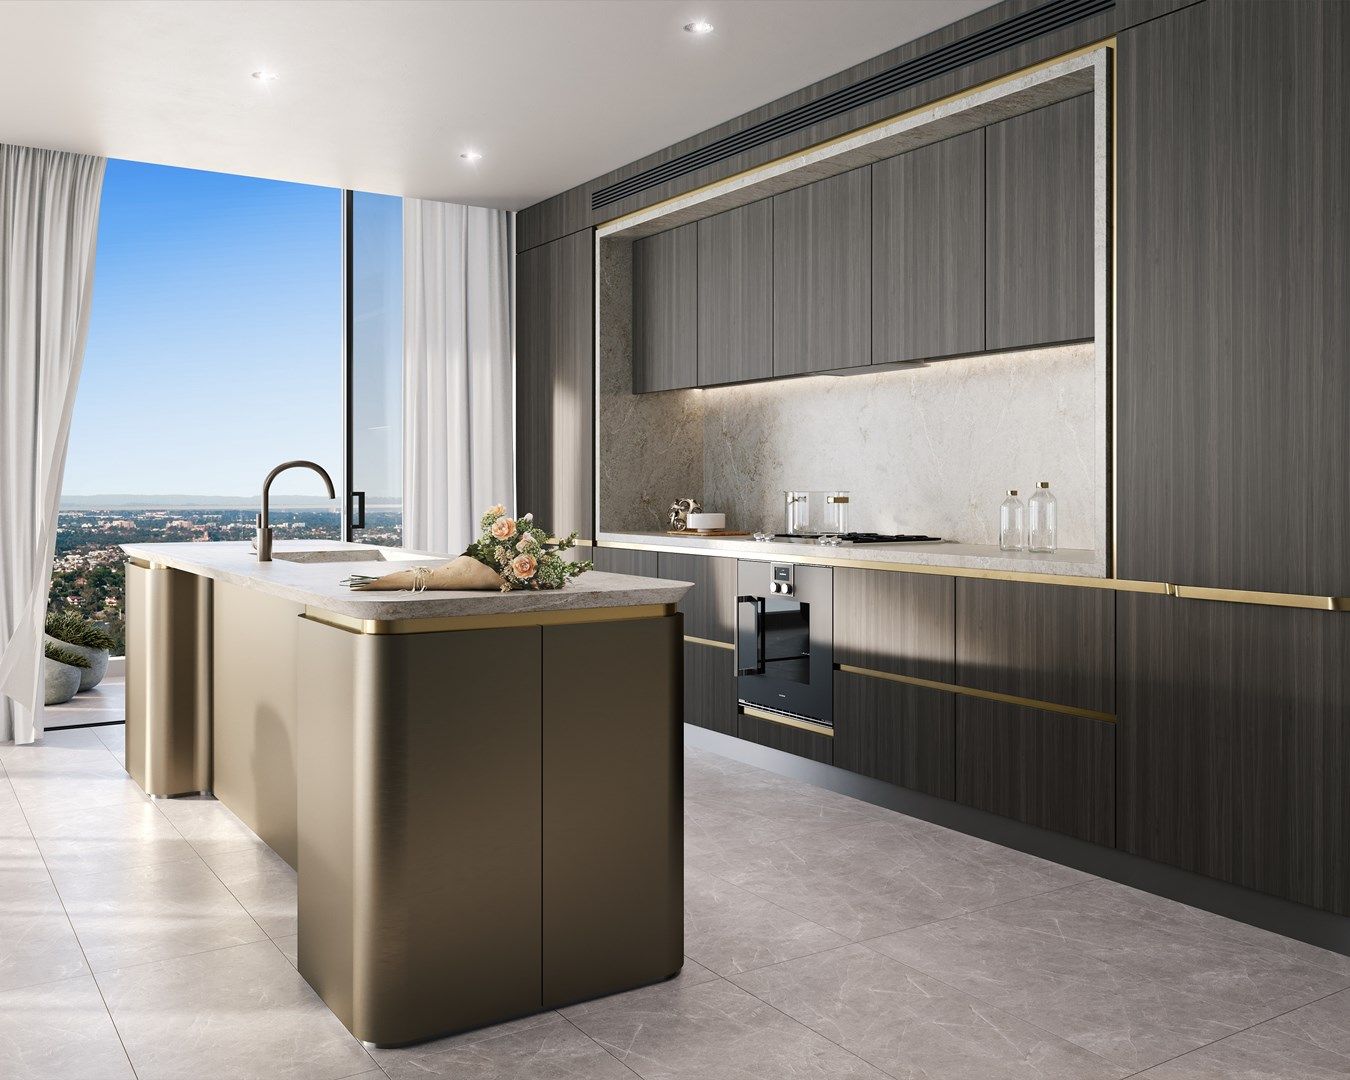 1 bedrooms Apartment / Unit / Flat in 88 Christie street ST LEONARDS NSW, 2065